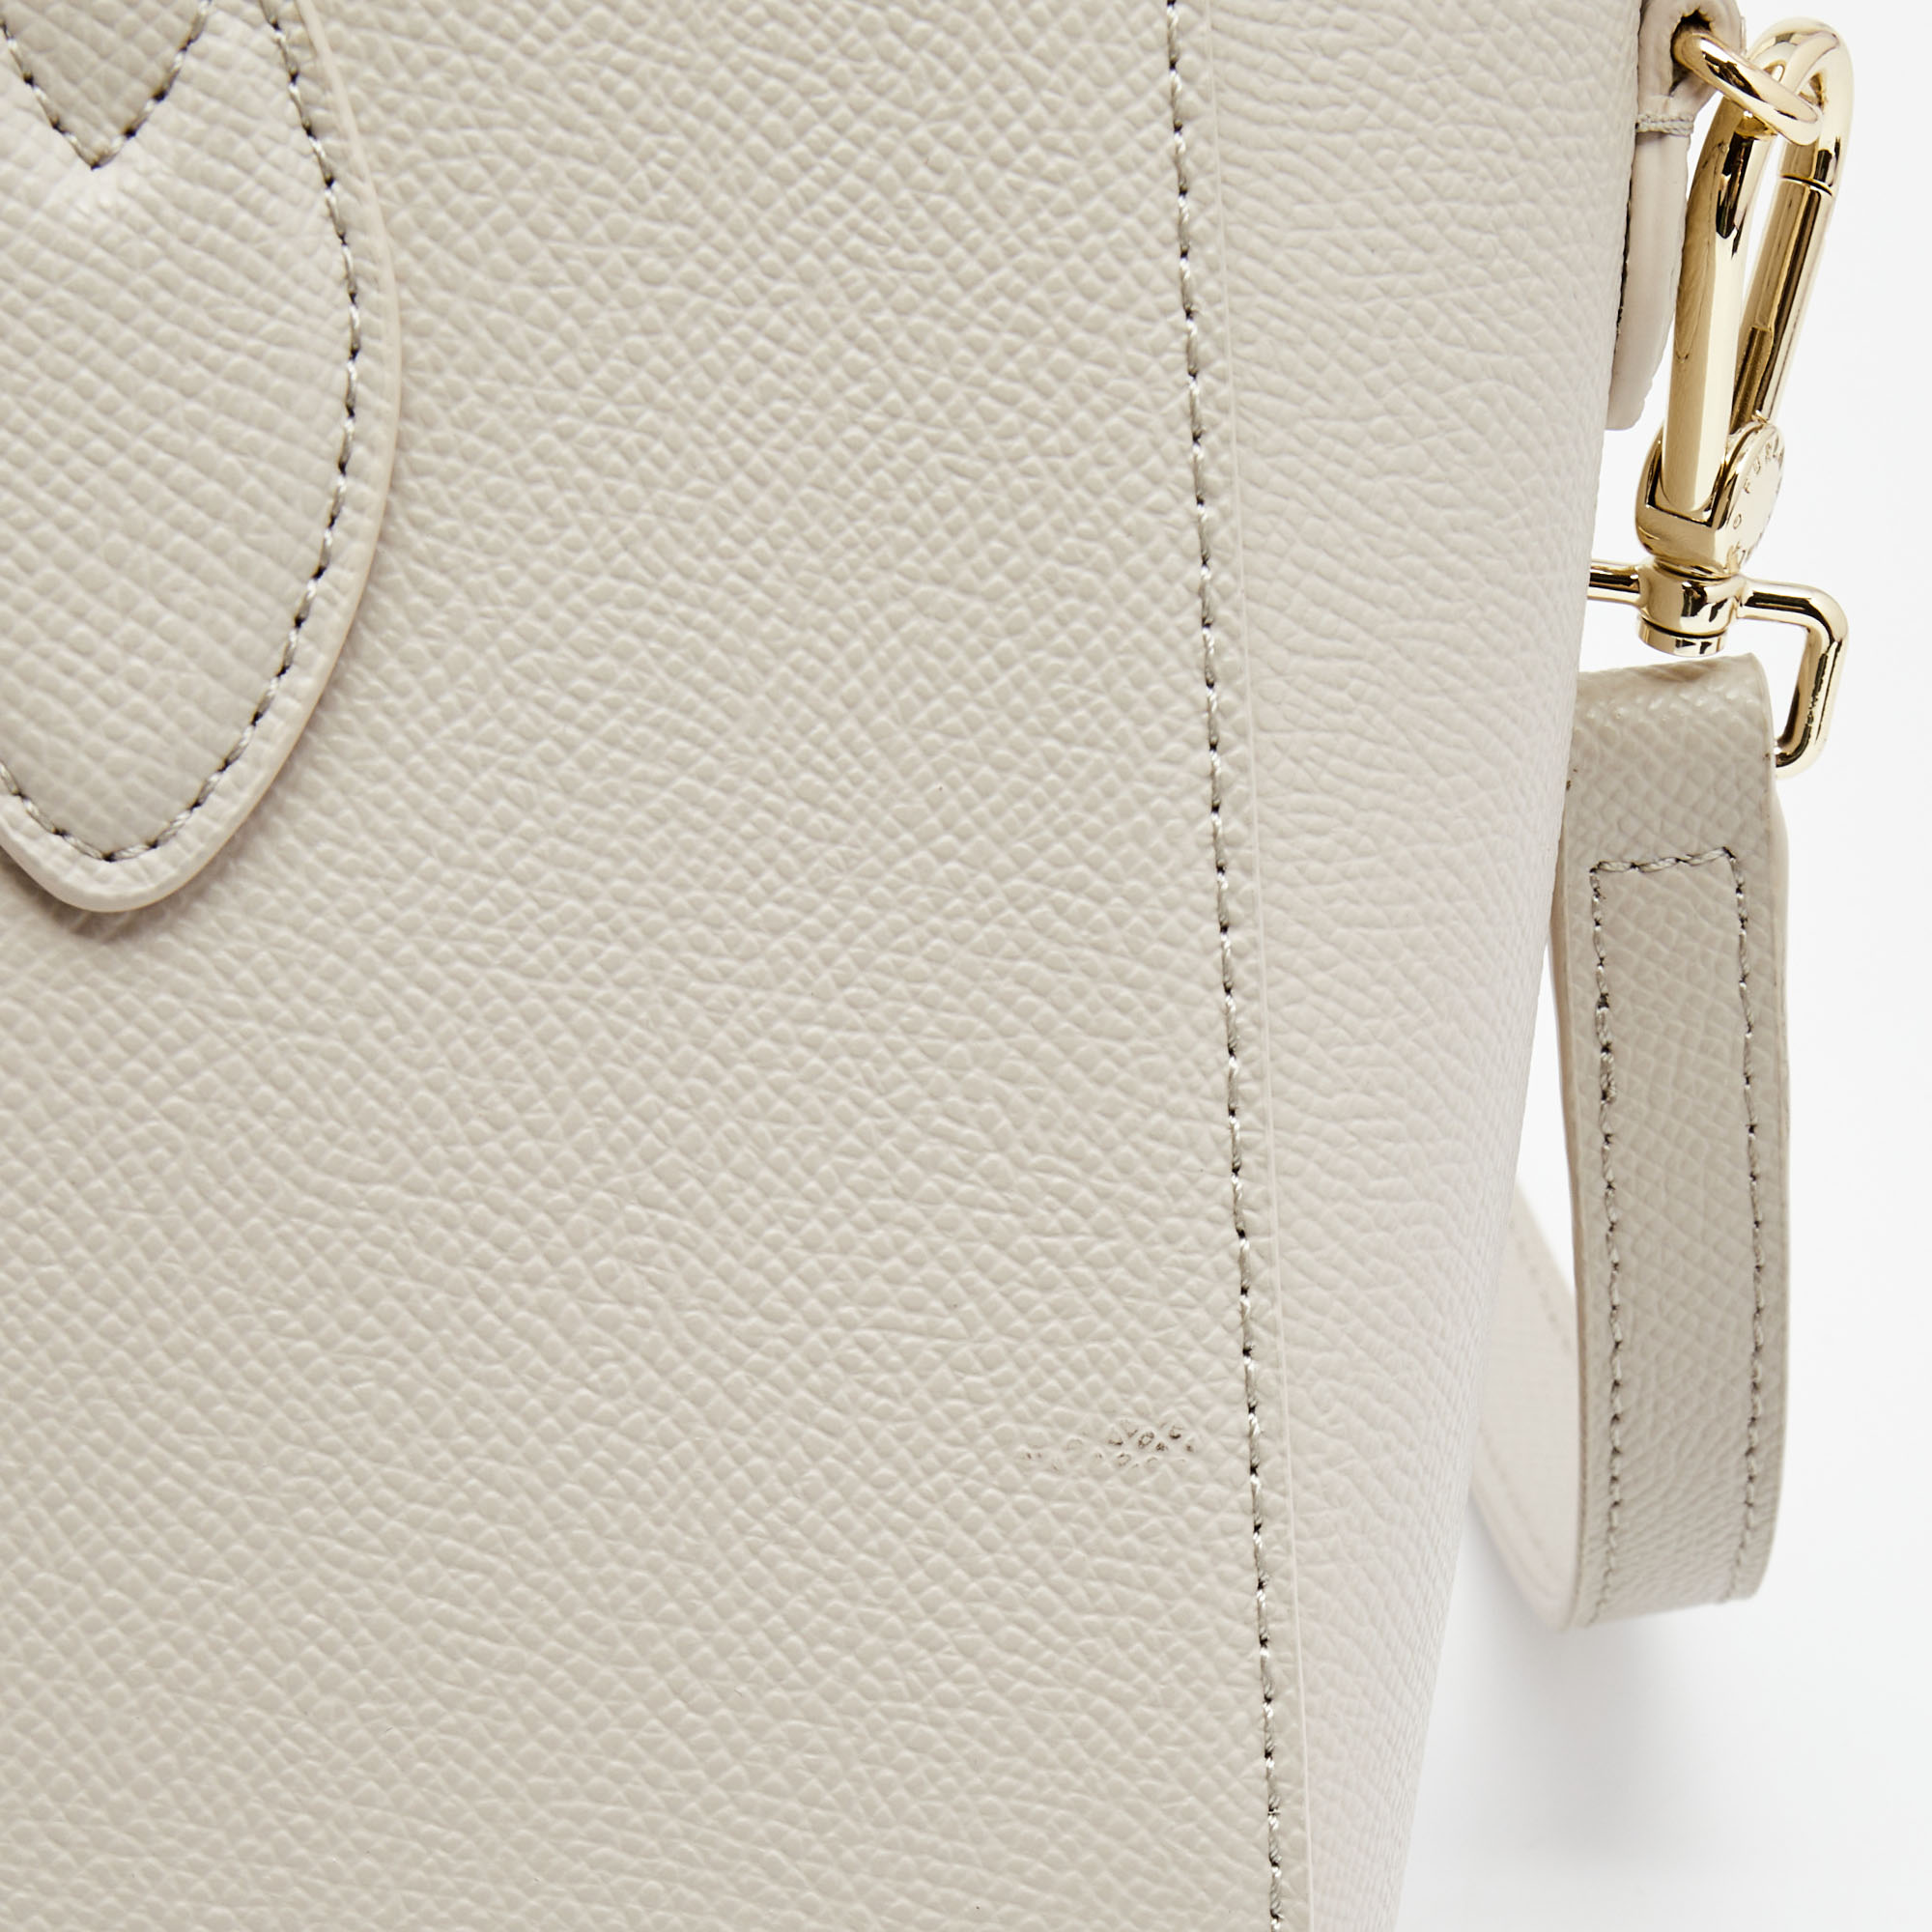 Furla Off-White Leather Minerva Satchel